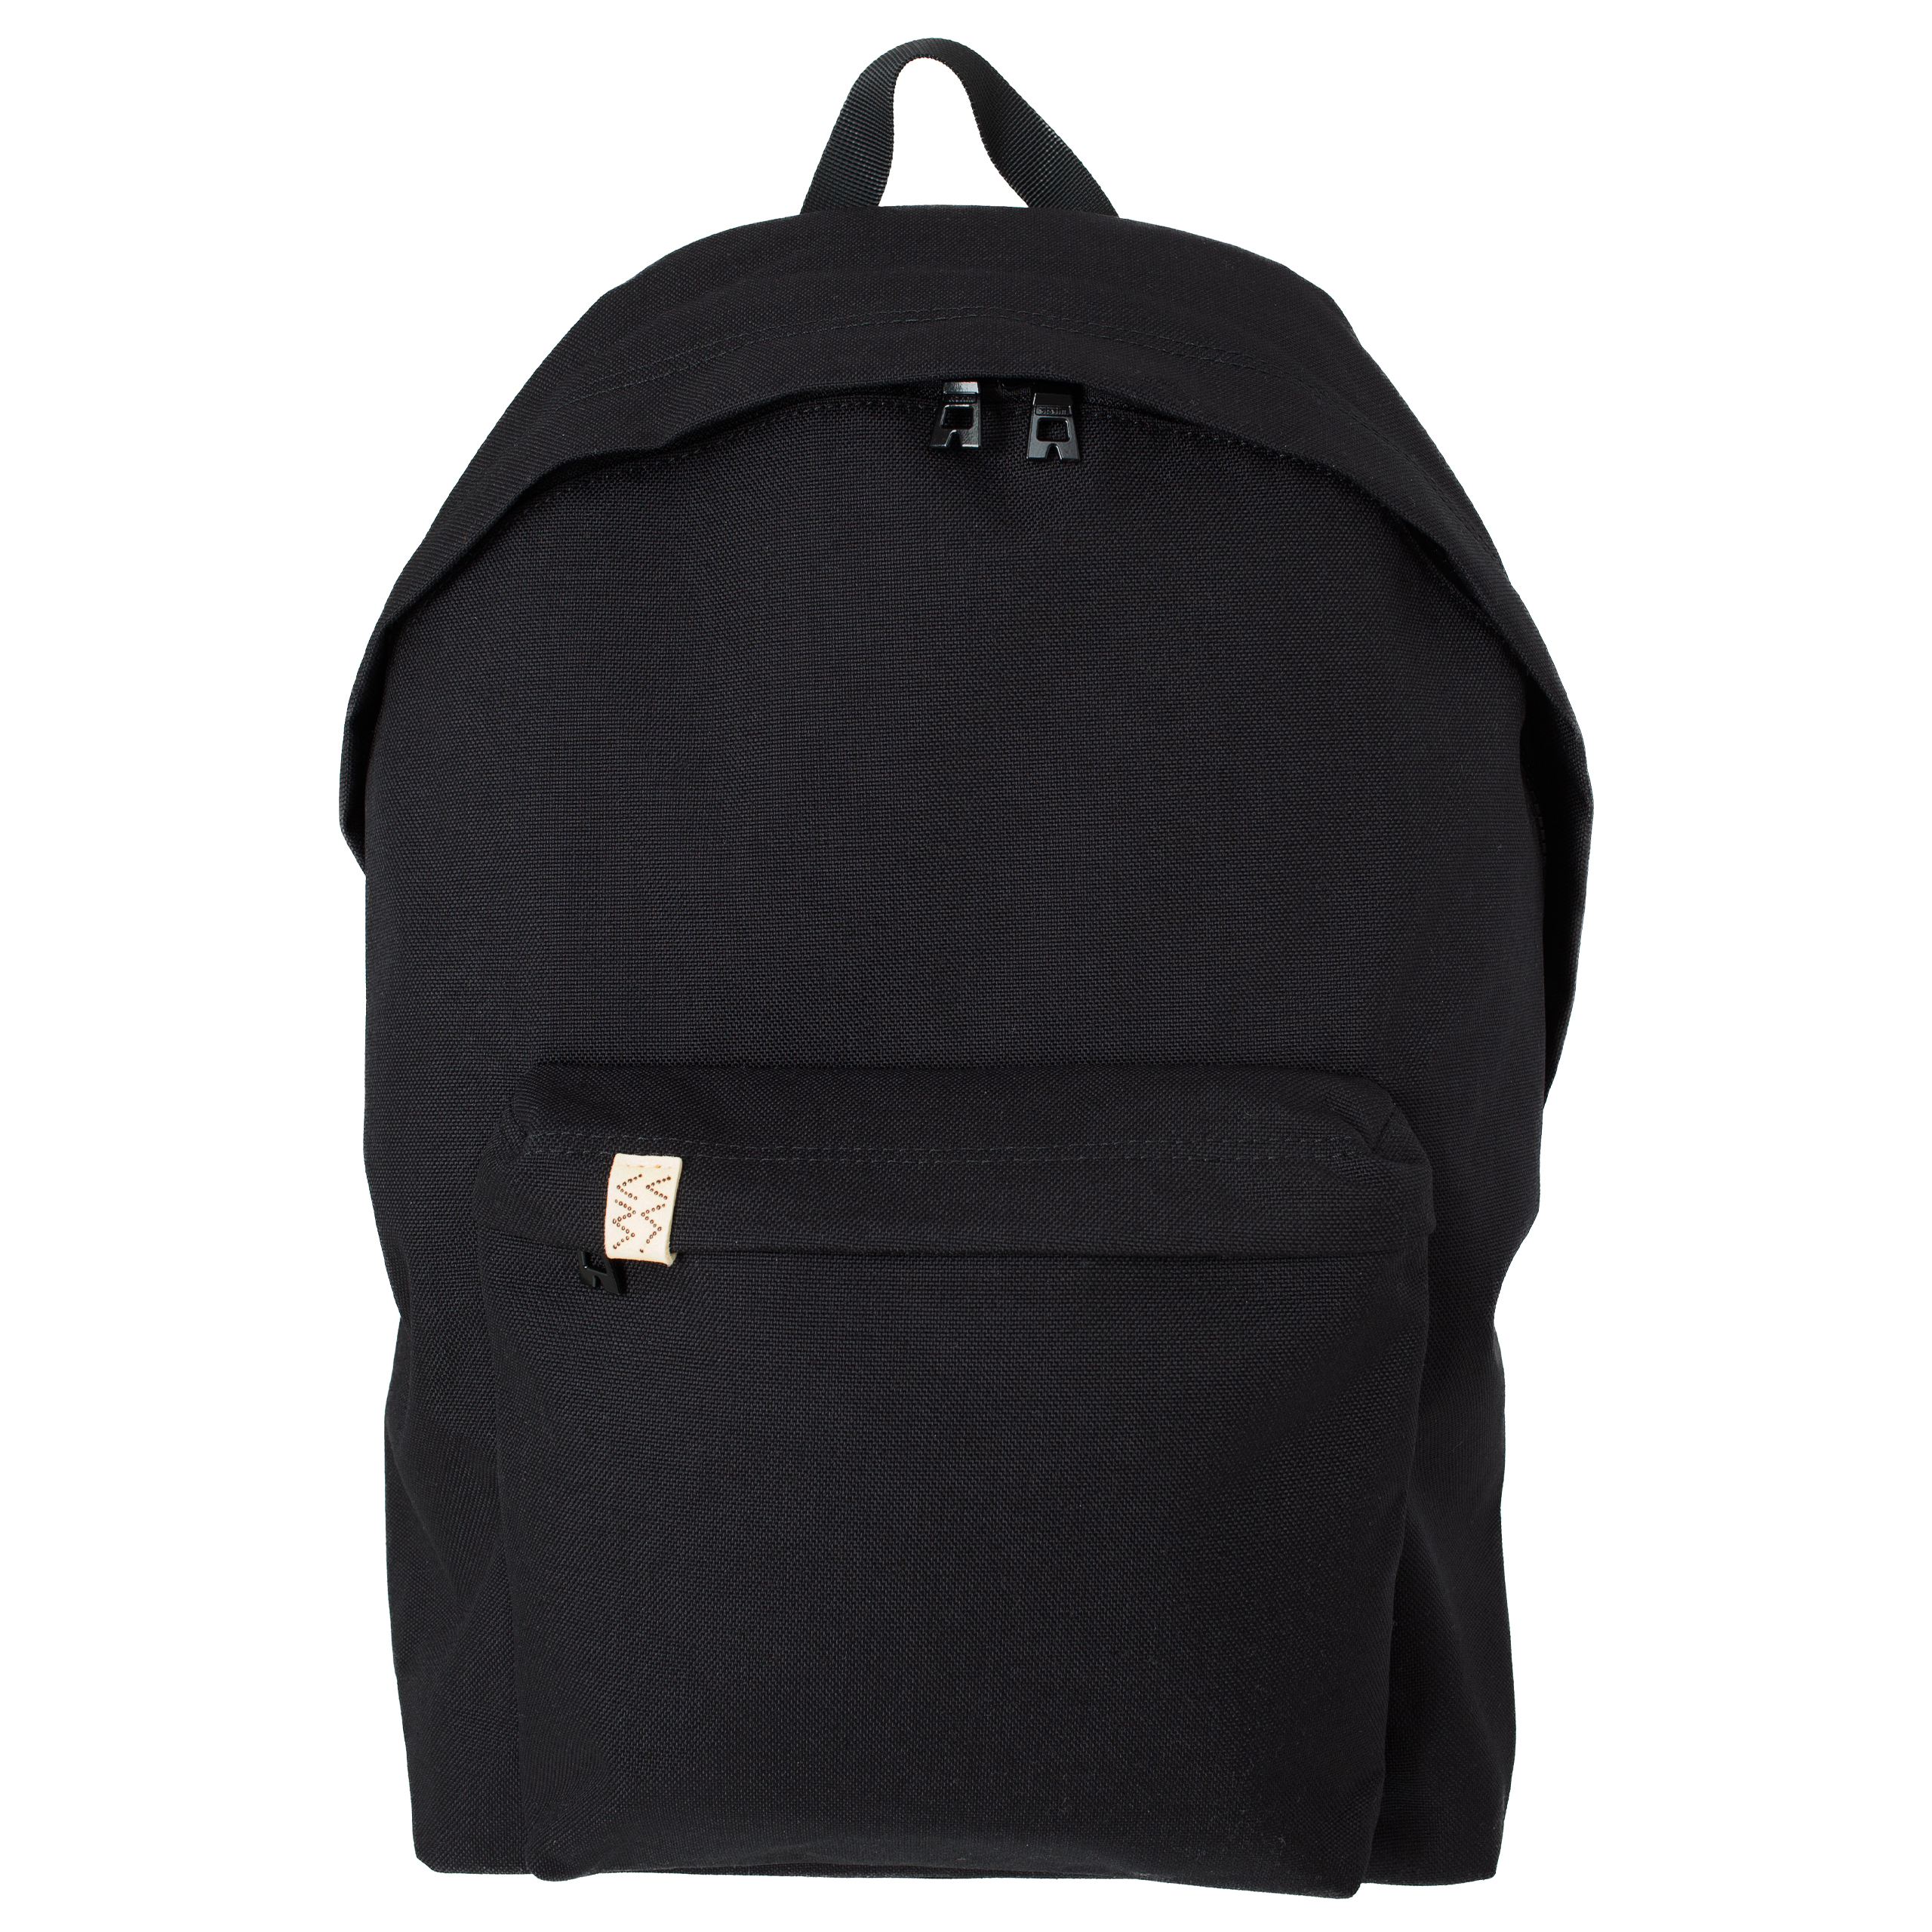 Черный рюкзак 22L visvim 0123103003030/BLACK, размер One Size